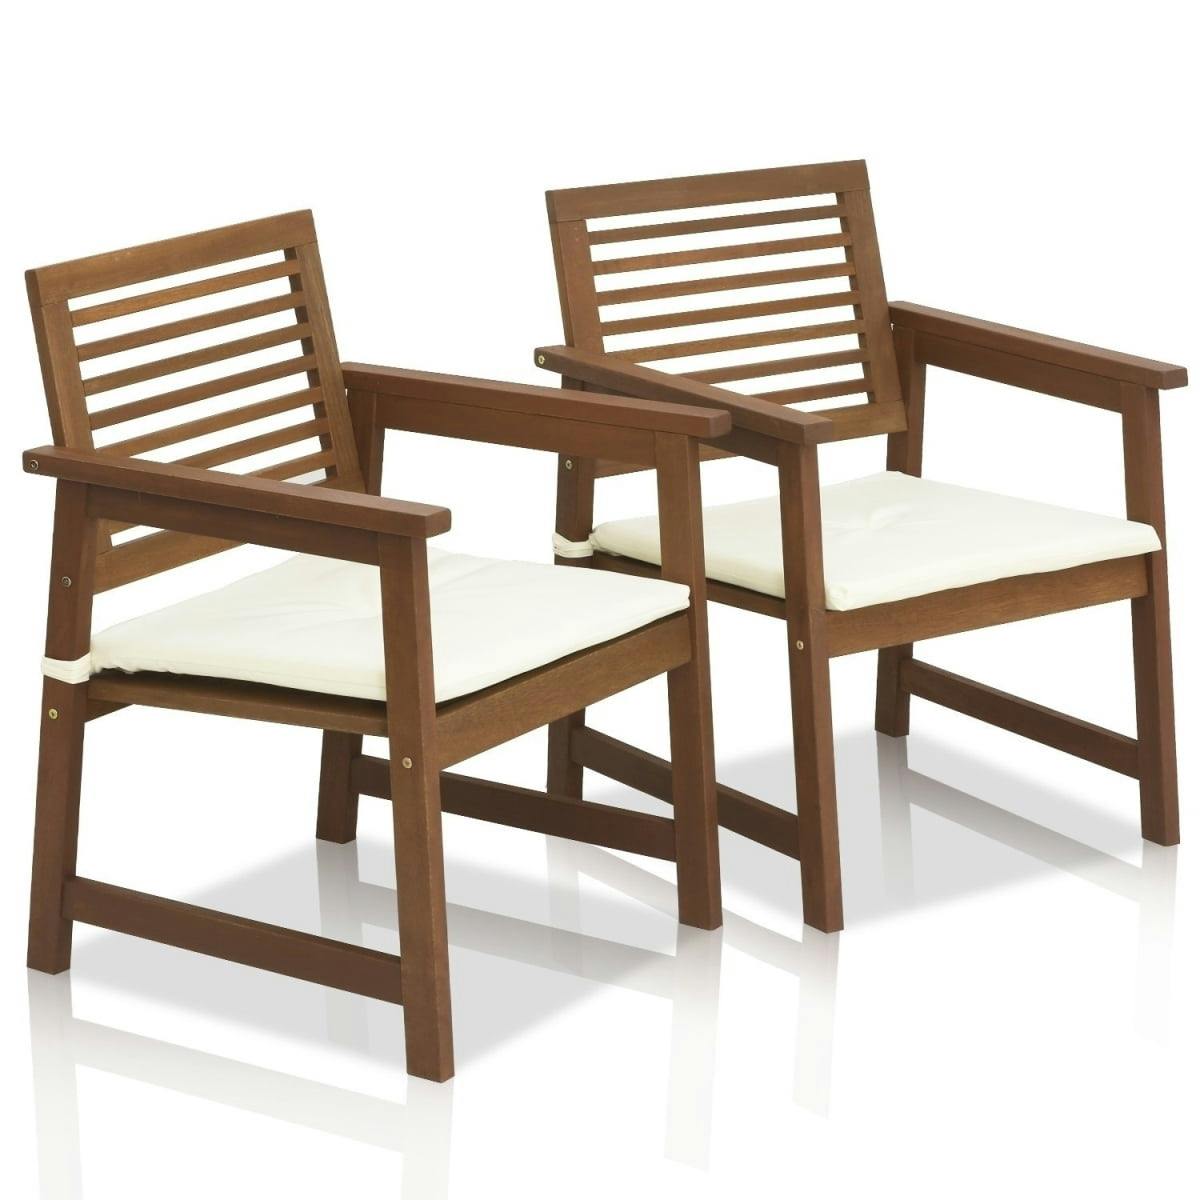 Tioman Teakwood Tropical Outdoor Dining Chair with Cushion